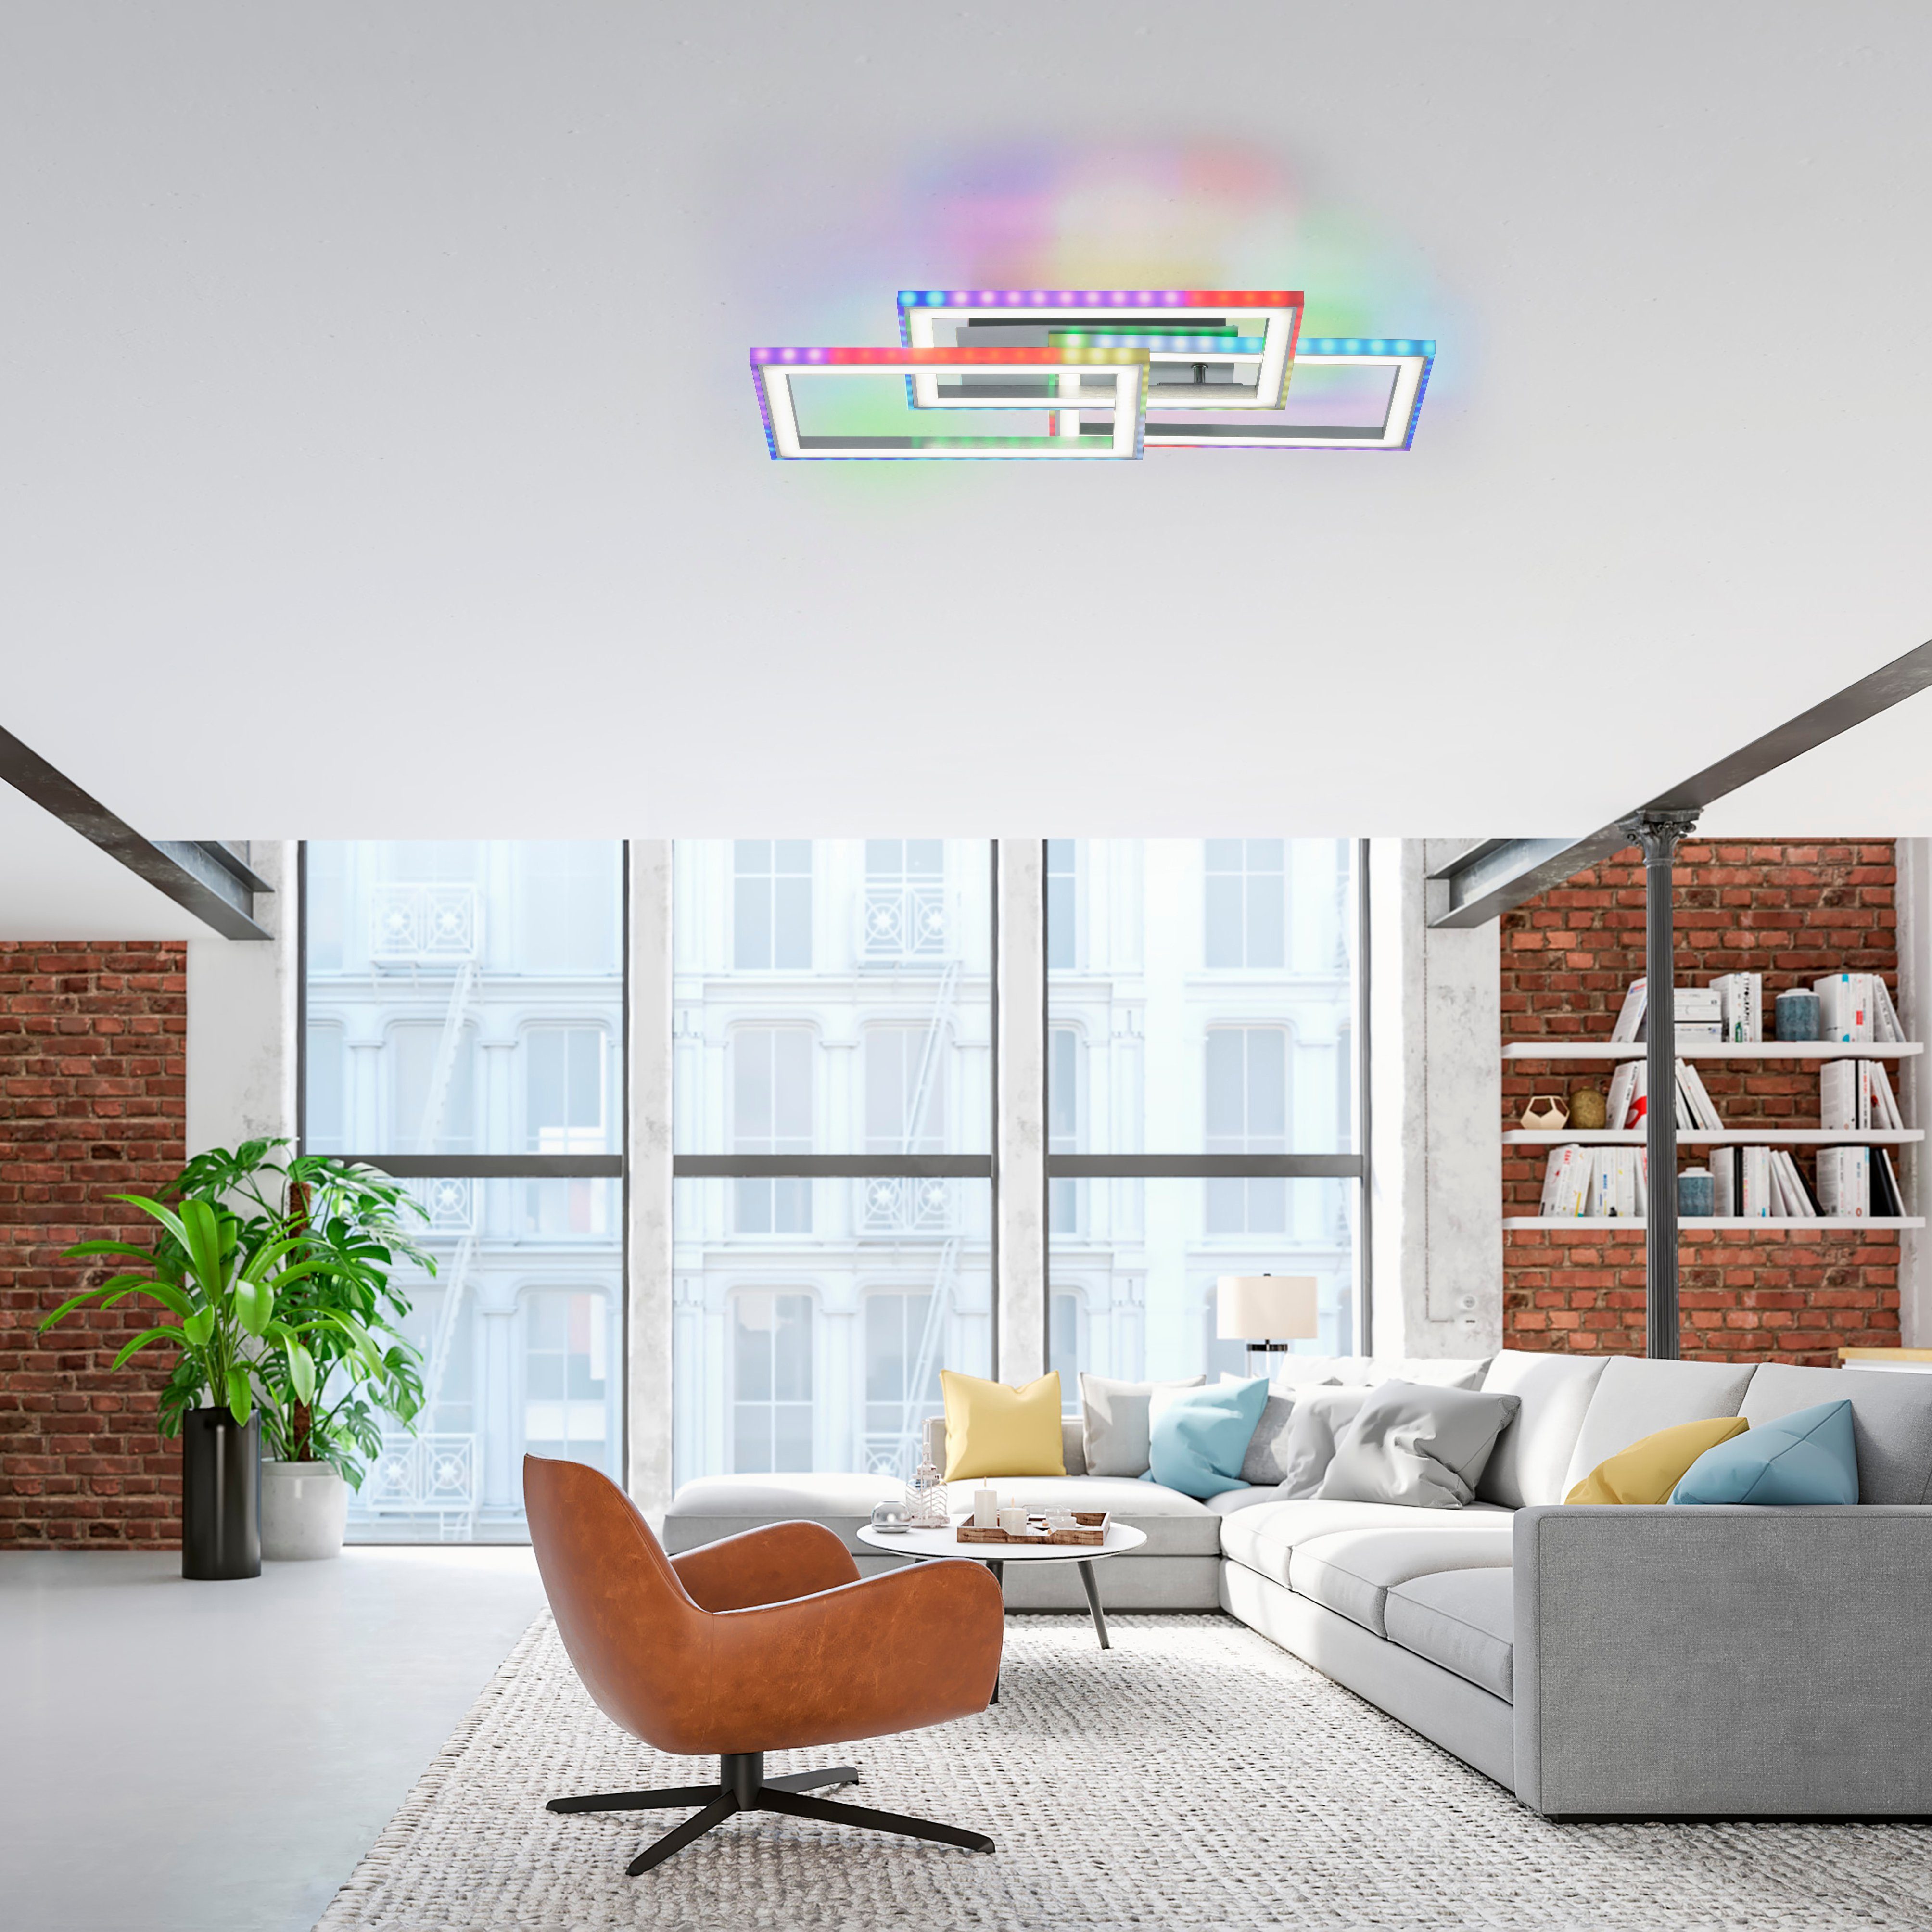 über kaltweiß, RGB-Rainbow, Deckenleuchte - dimmbar inkl., - LED integriert, warmweiß LED, Direkt FELIX60, Infrarot CCT Leuchten Fernbedienung, fest